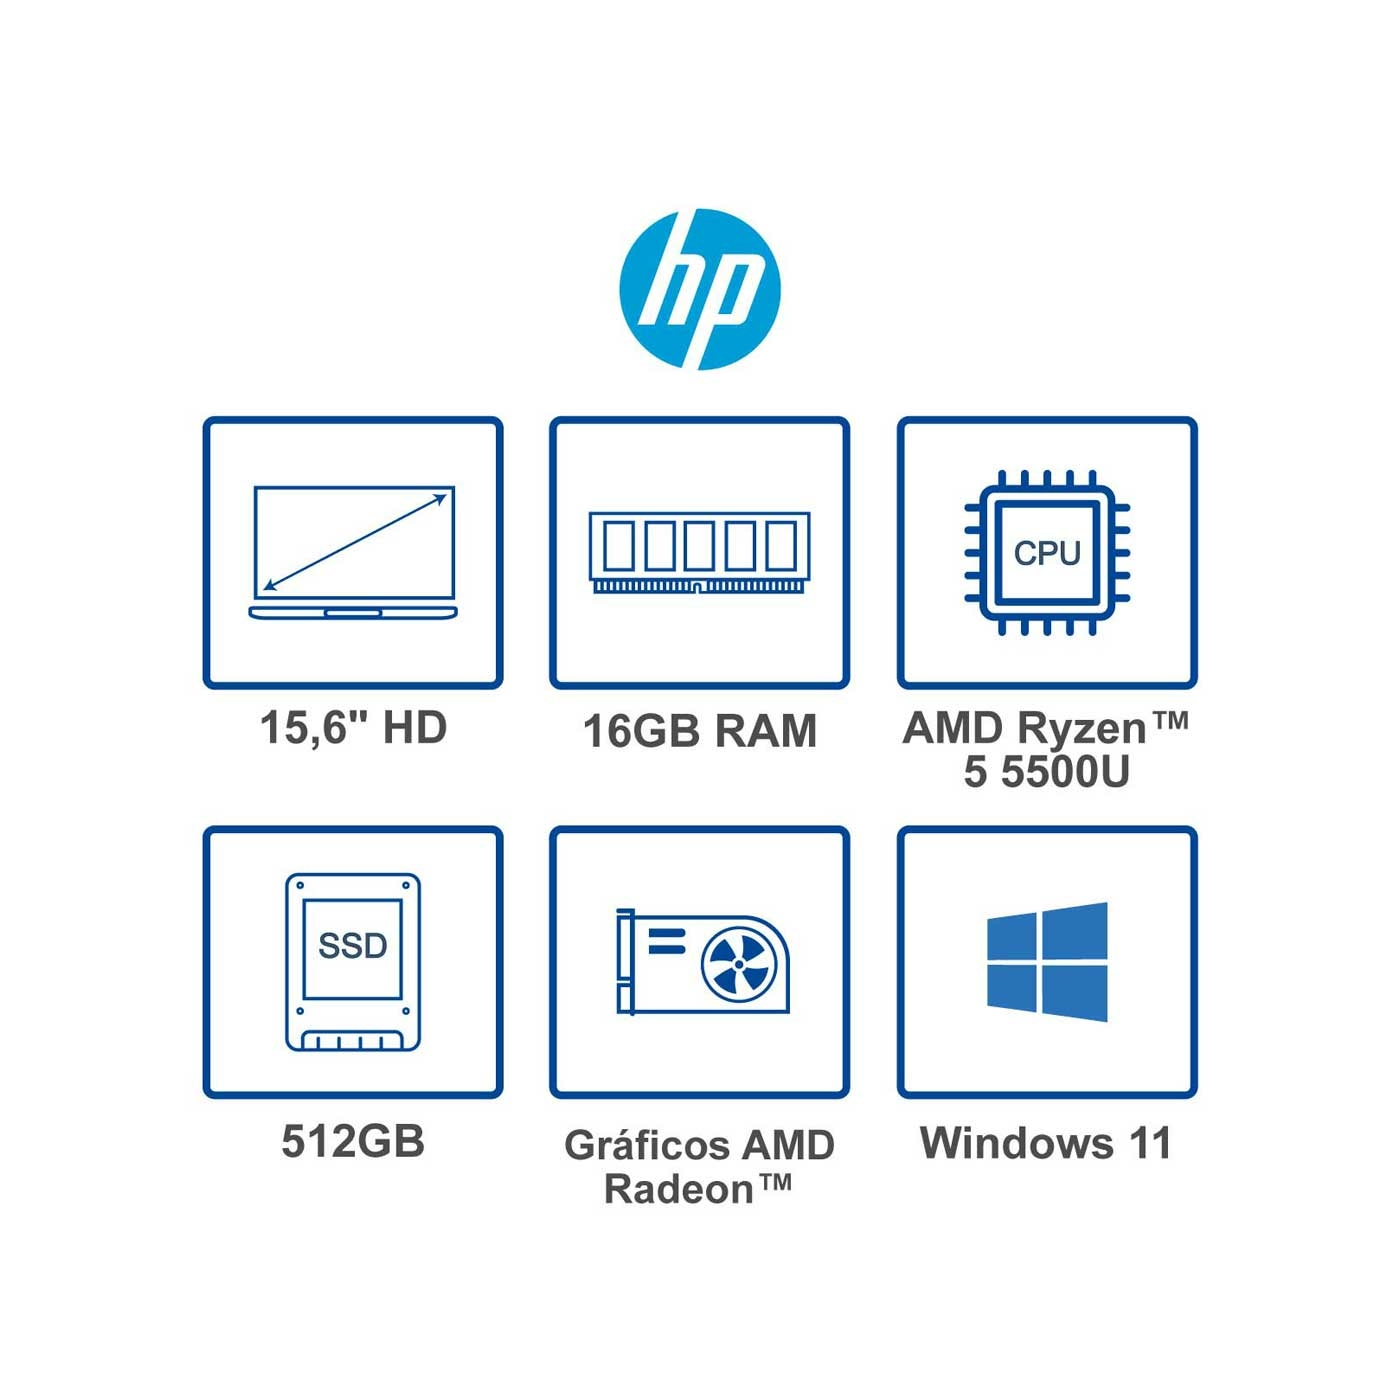 Computador Portátil HP 15.6" Pulgadas ef2501la - AMD Ryzen 5 - RAM 16GB - Disco SSD 512 GB - Plata Natural